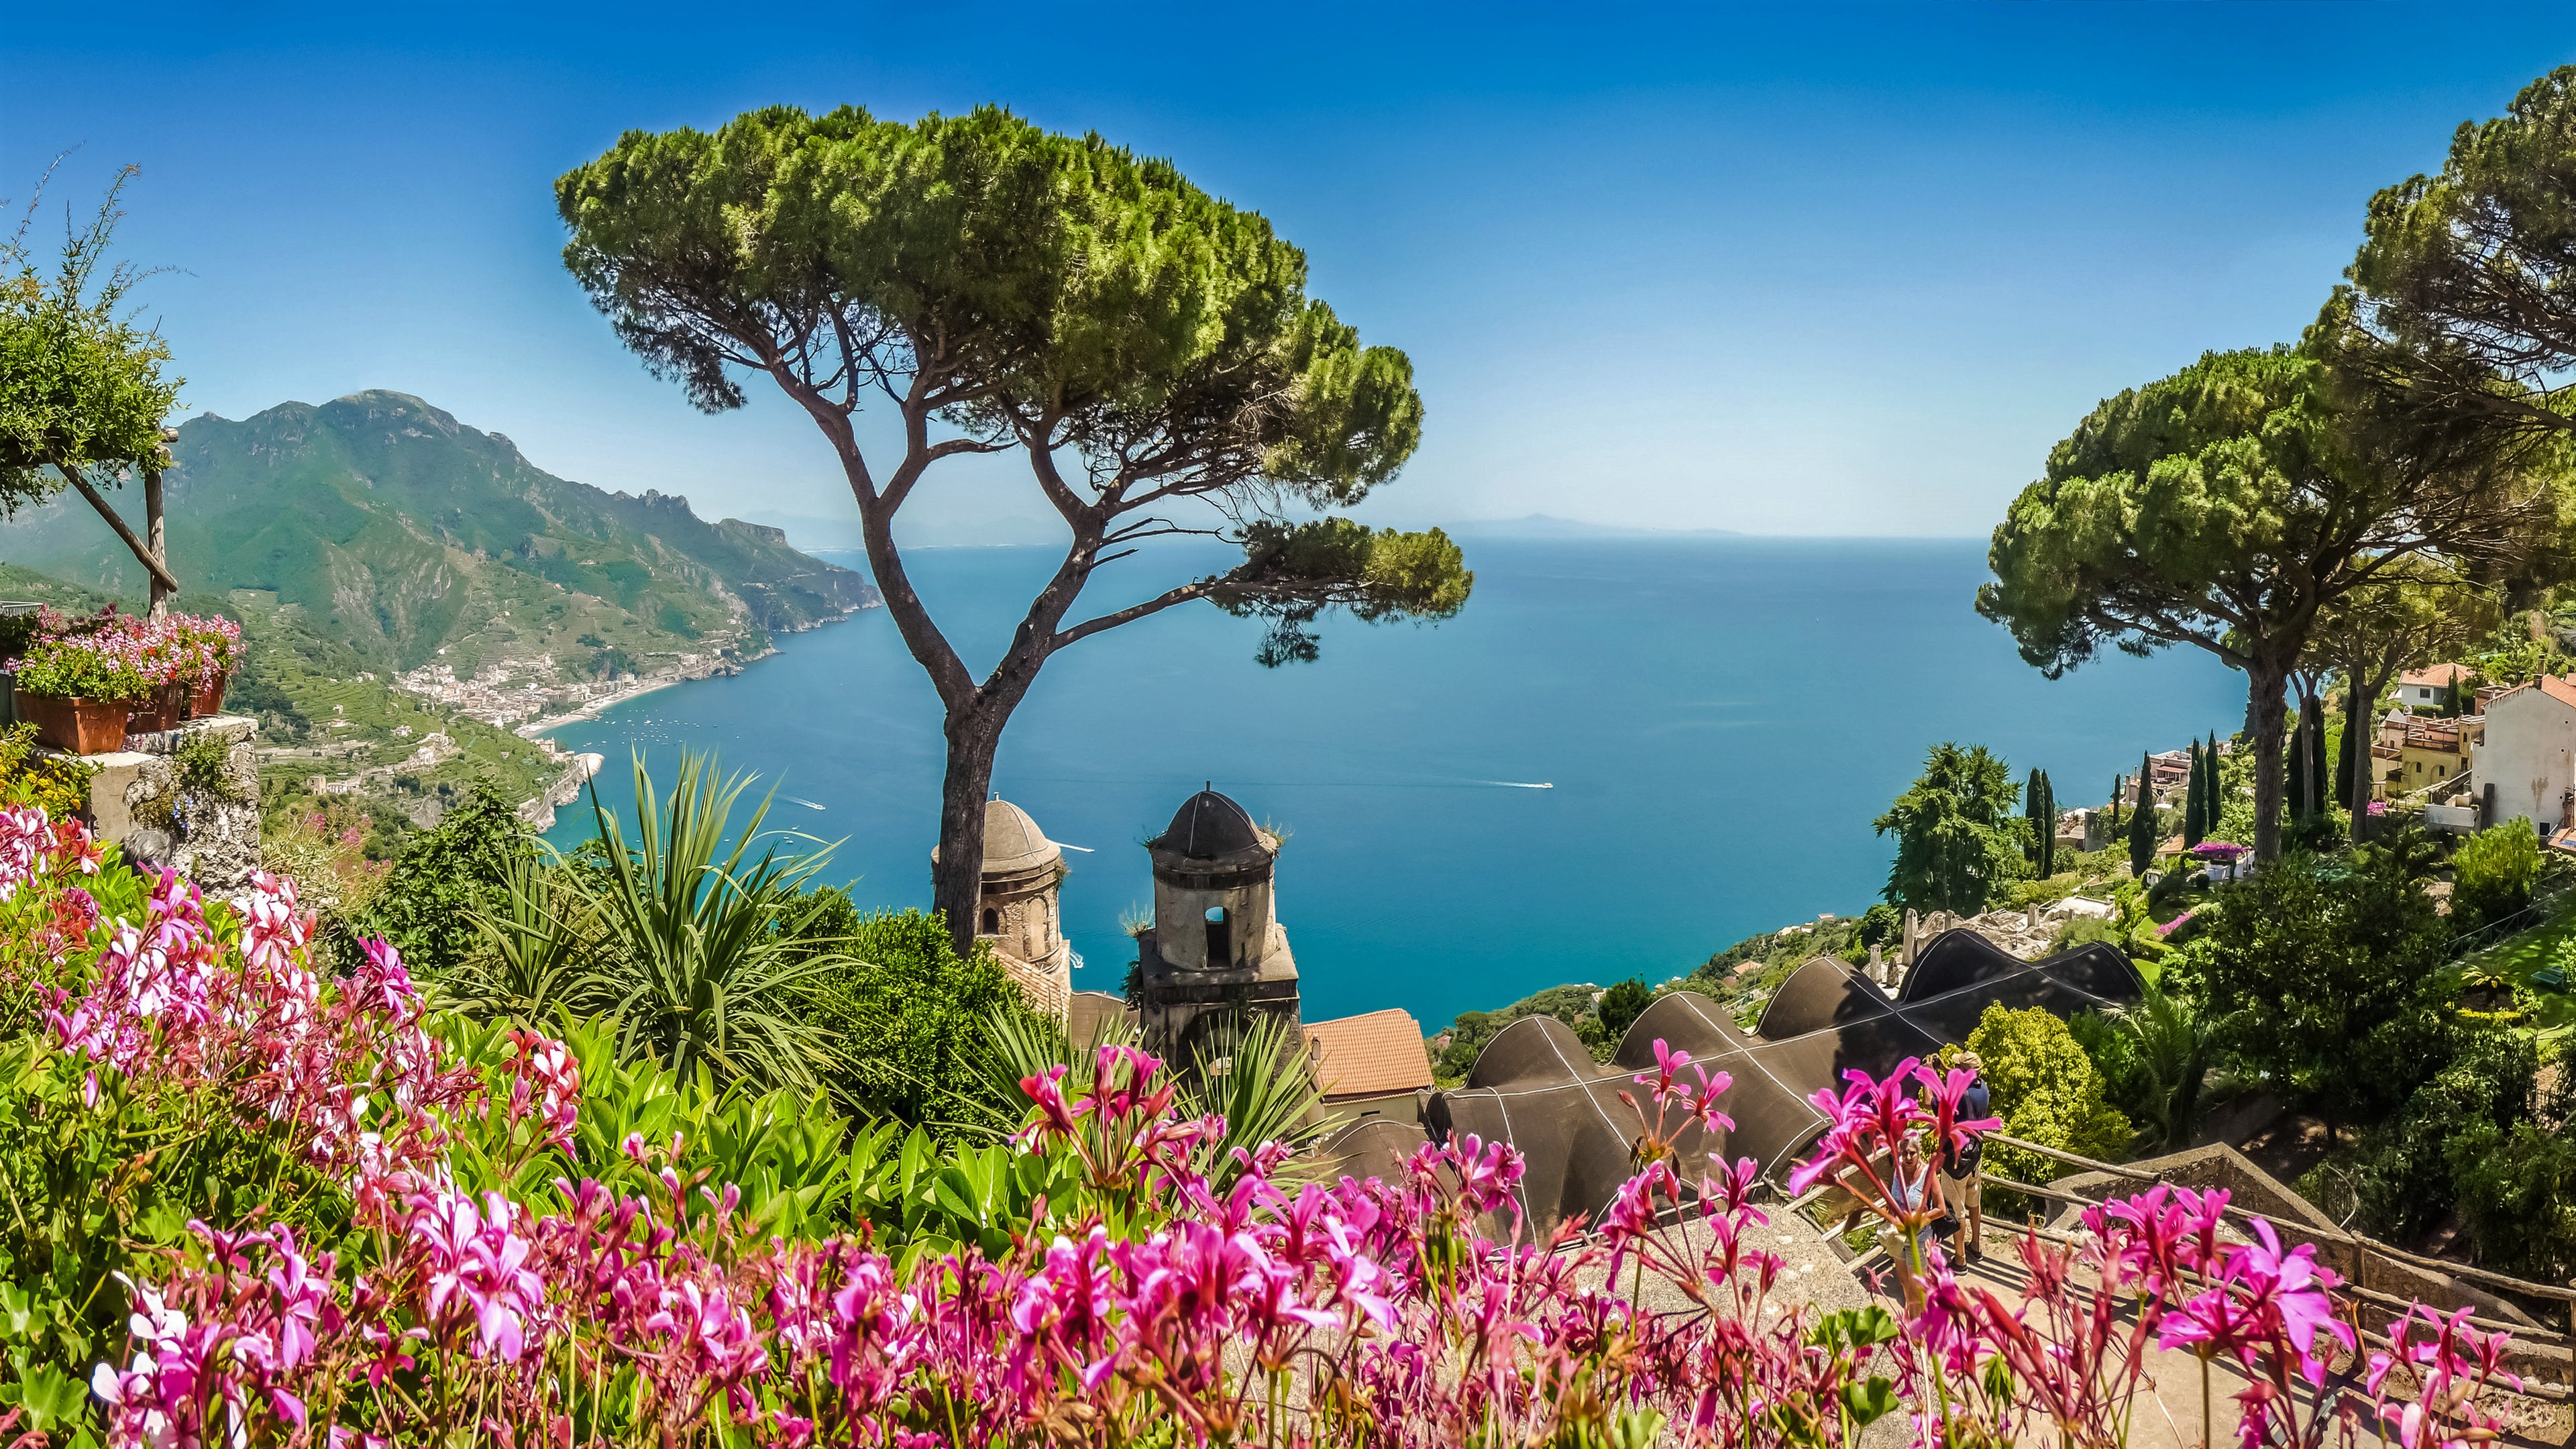 Amalfi Coast In Italy 4k Ultra HD Wallpaper Background Image